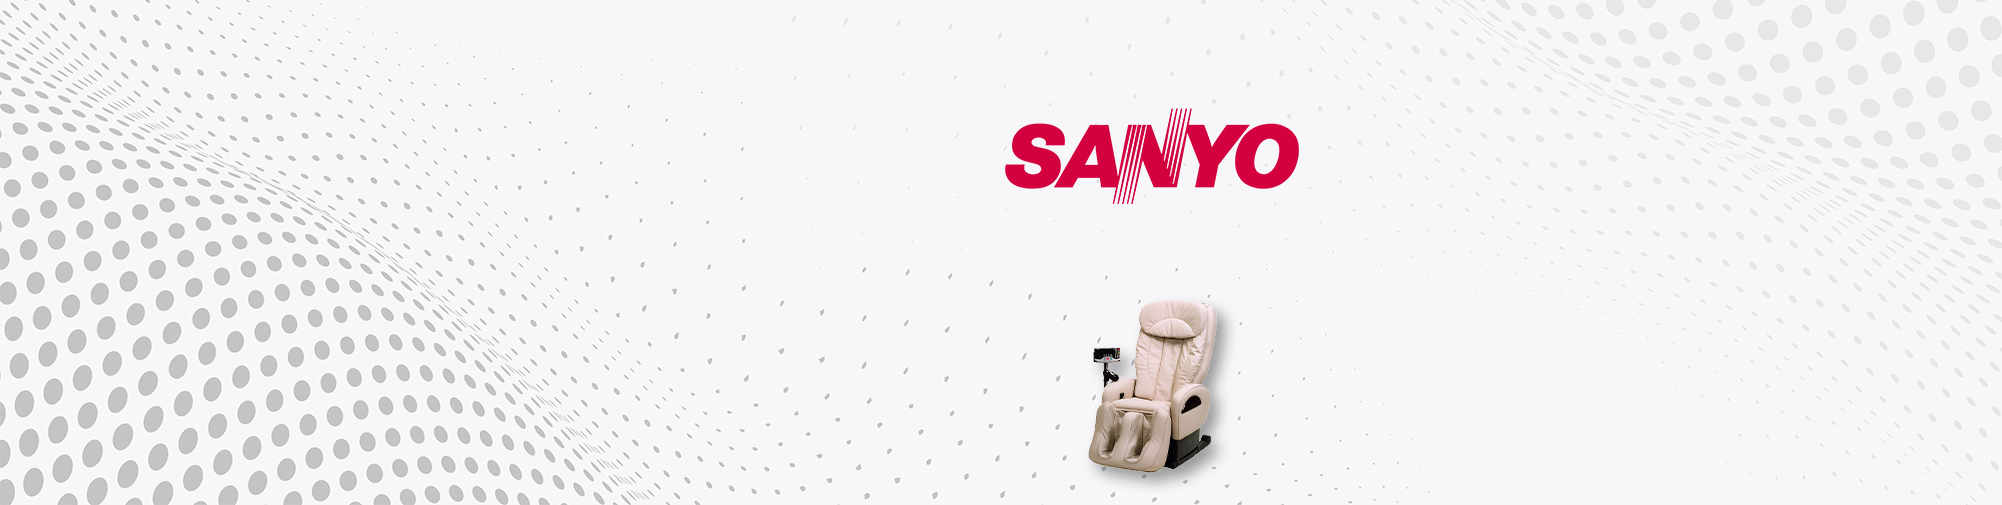 SANYO - Japanese brand company | Massage Chair World